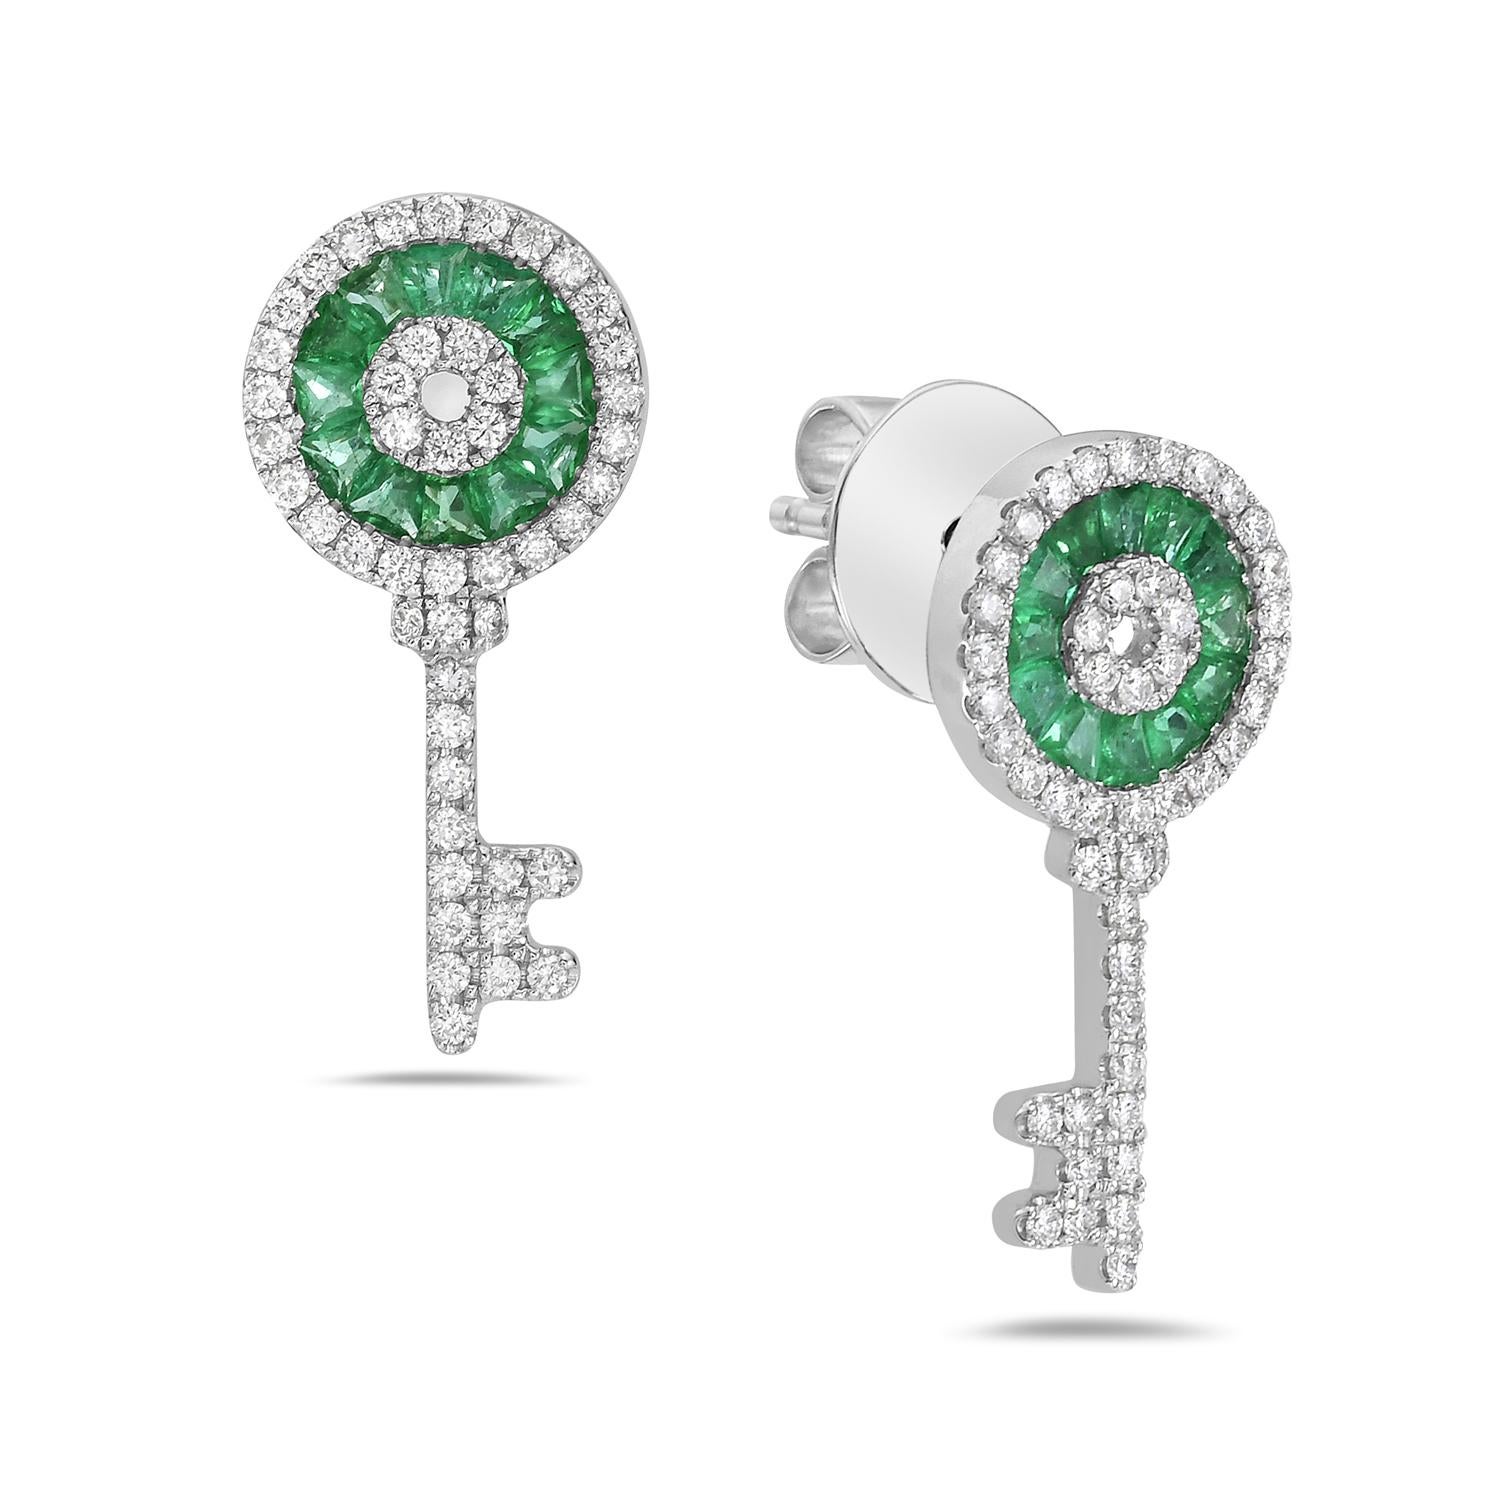 Art Deco 1.01 Ct Emerald & Diamond Earrings Designed In Key Shape Made In 18k White Gold For Sale